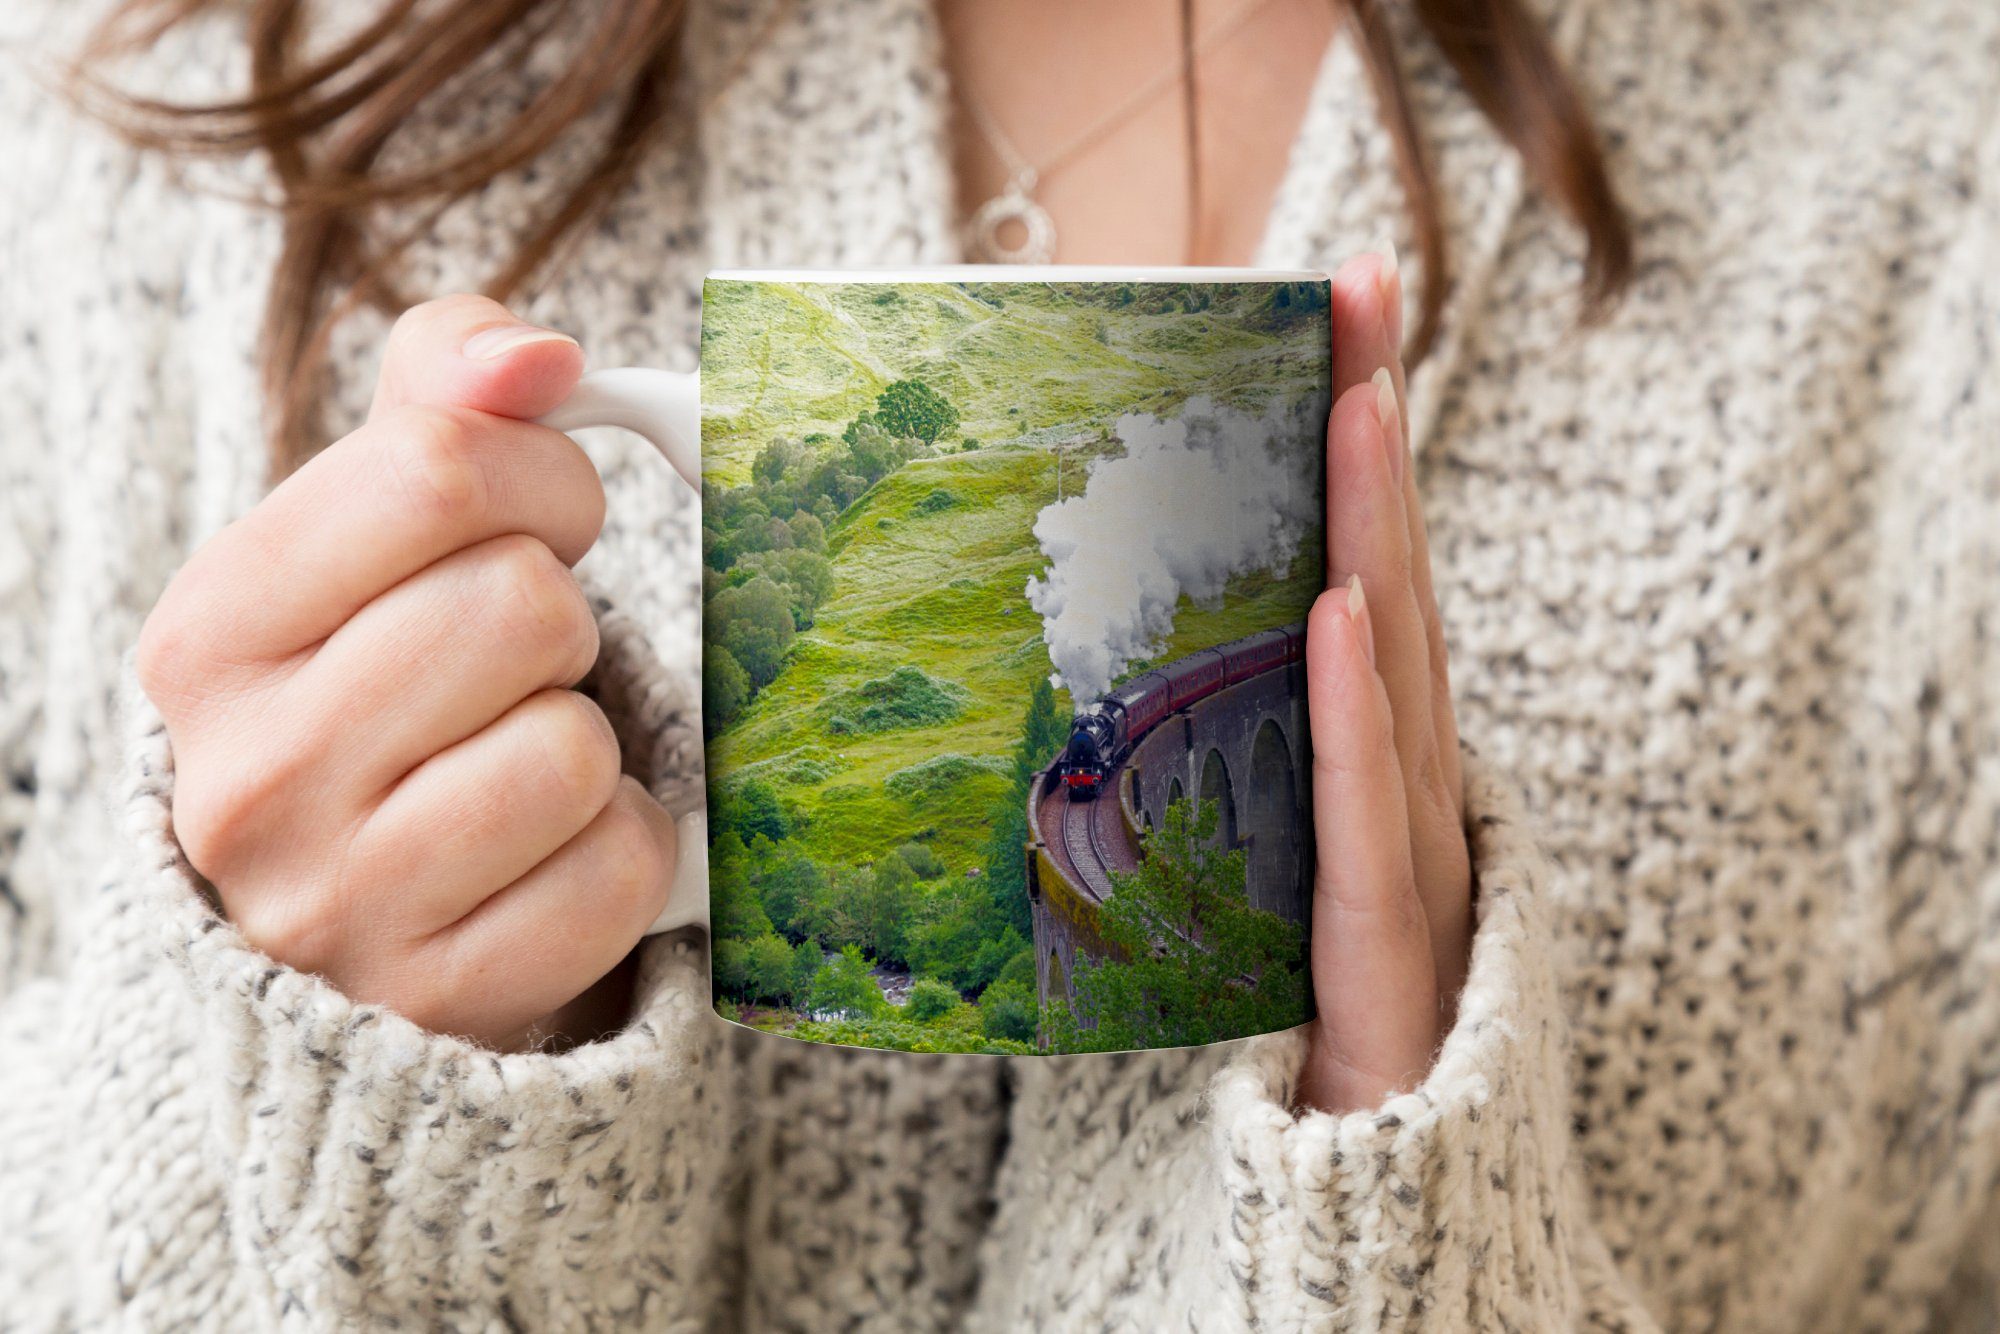 MuchoWow Tasse Dampfzug inmitten Teetasse, grünen Schottlands, Teetasse, Landschaft Keramik, Kaffeetassen, Becher, Geschenk der